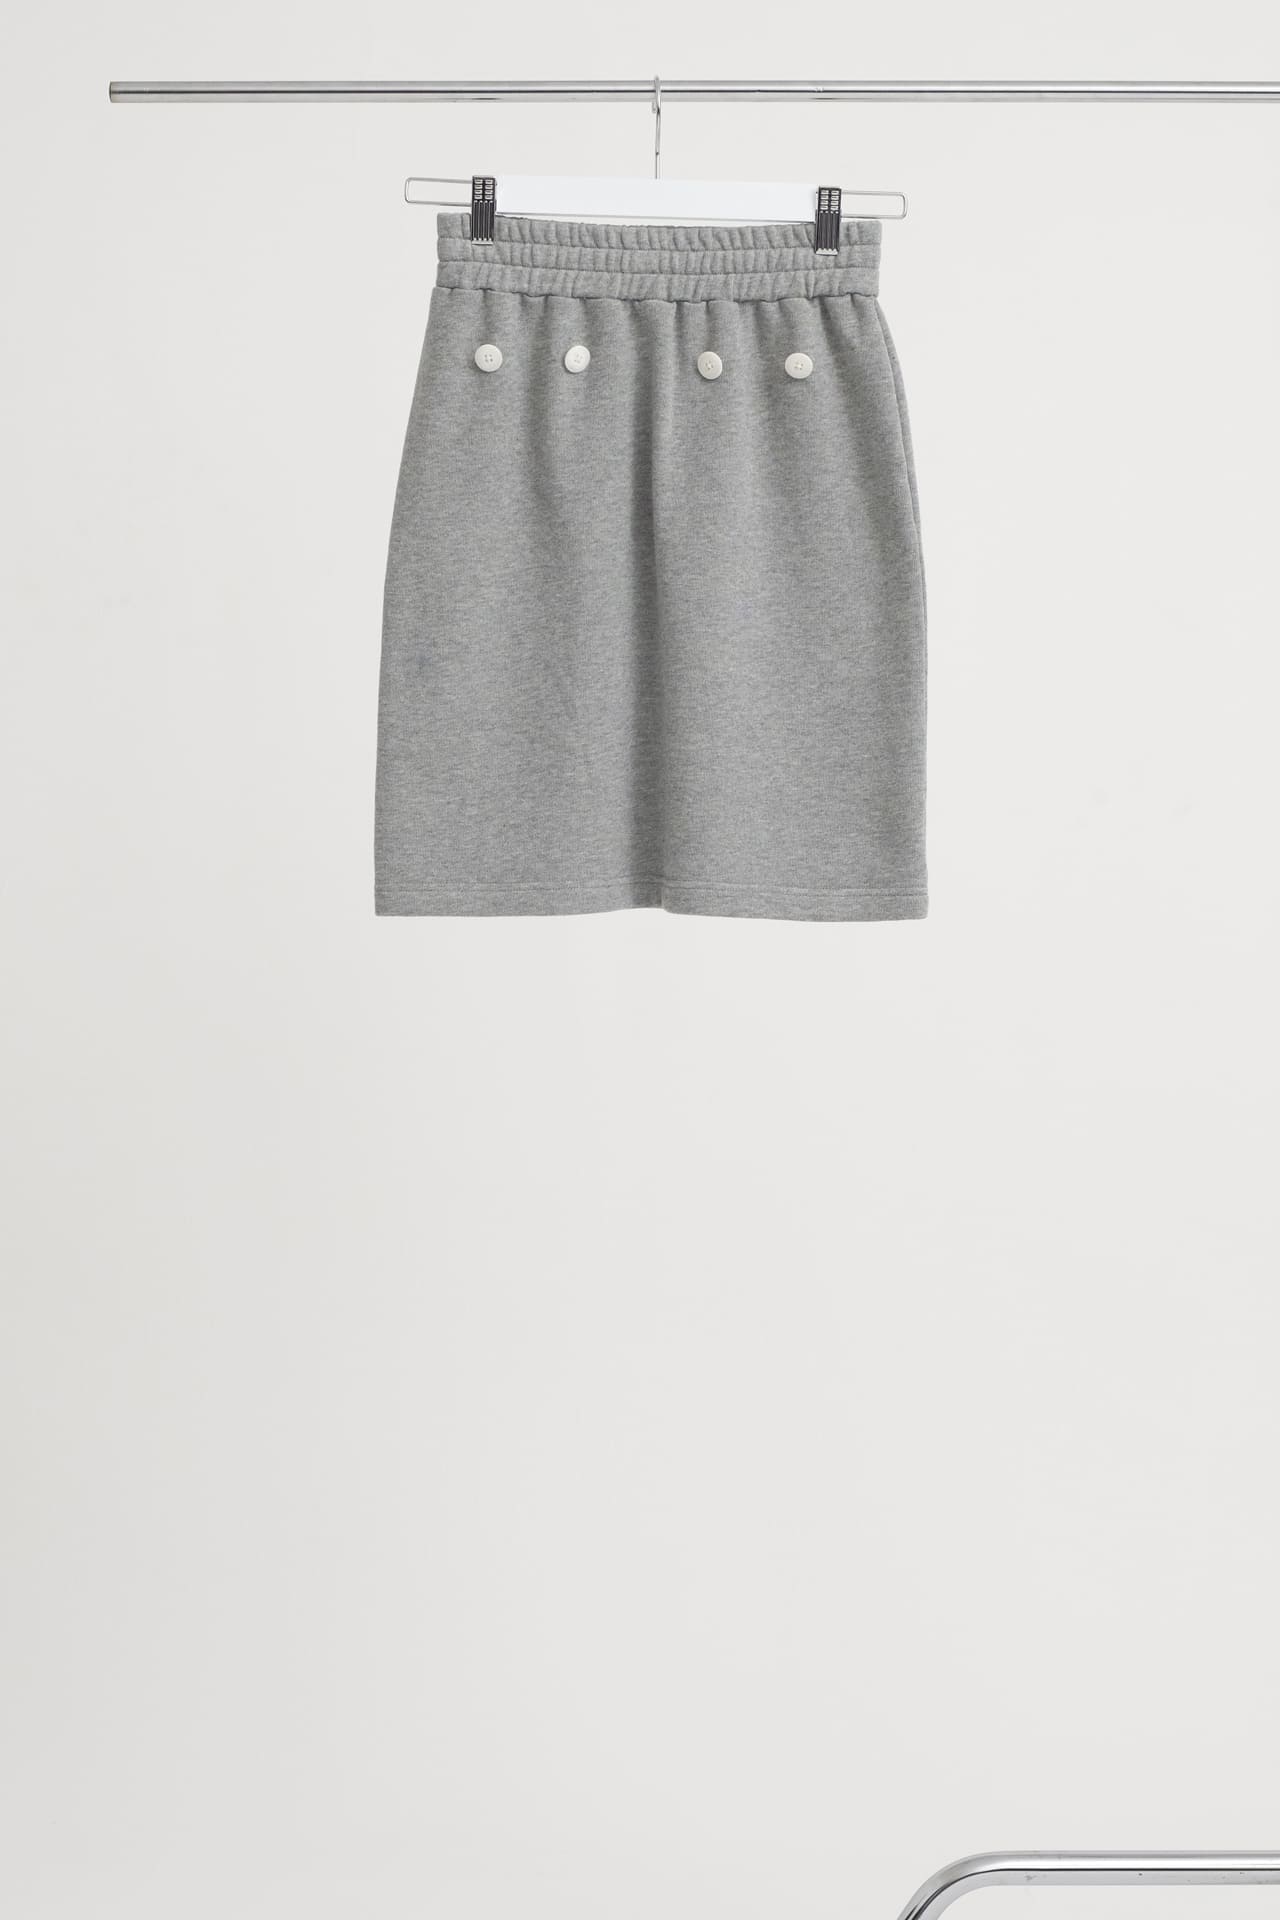 Layer_Sweat Skirt Long Gray